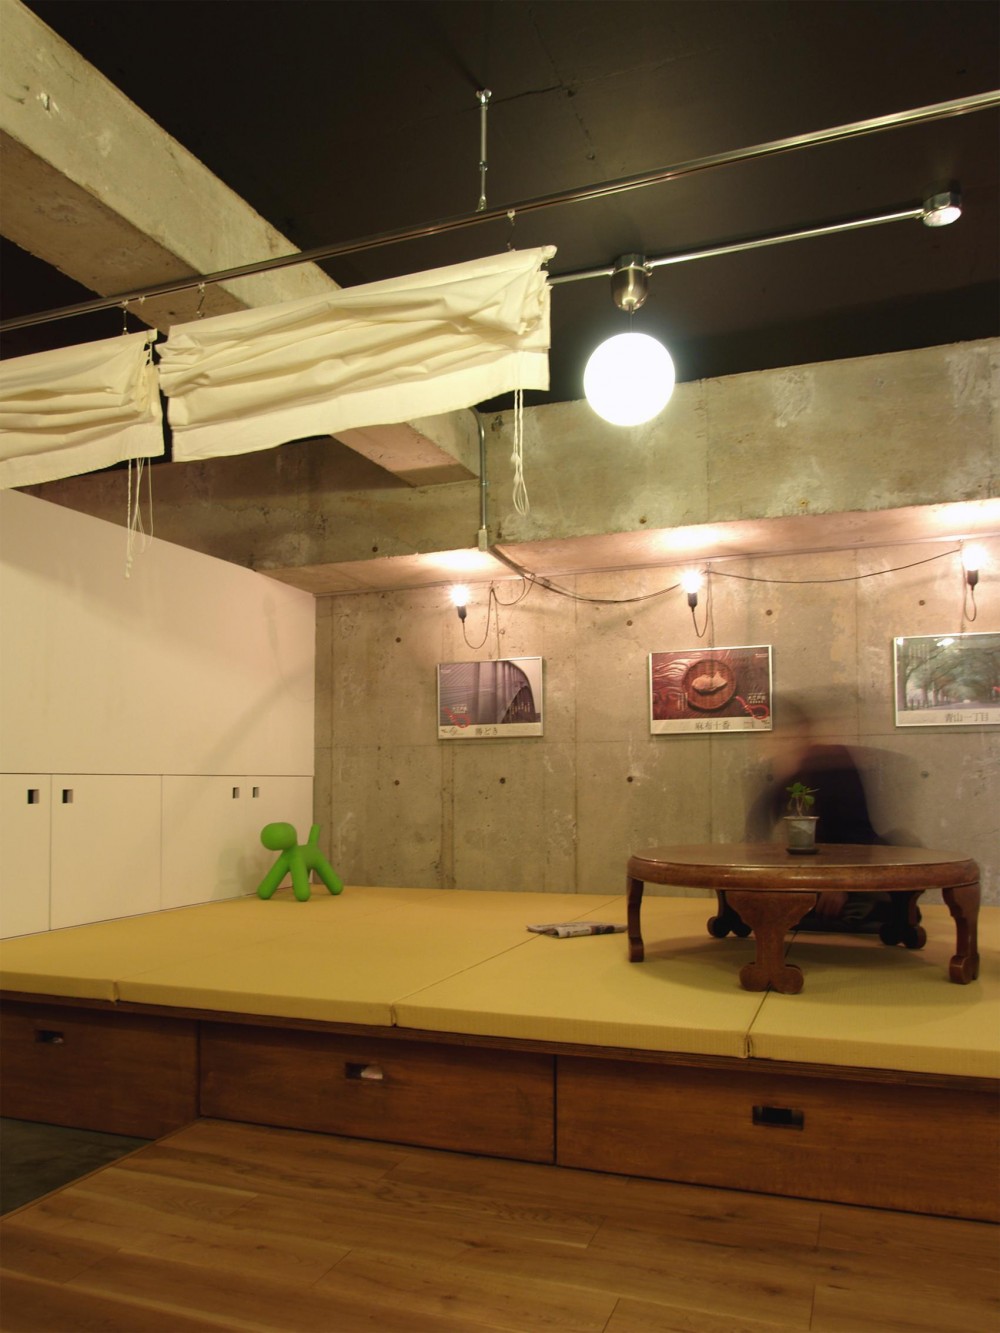 RIKUBUNー畳を生活の中心にしたリノベーション (畳スペース)